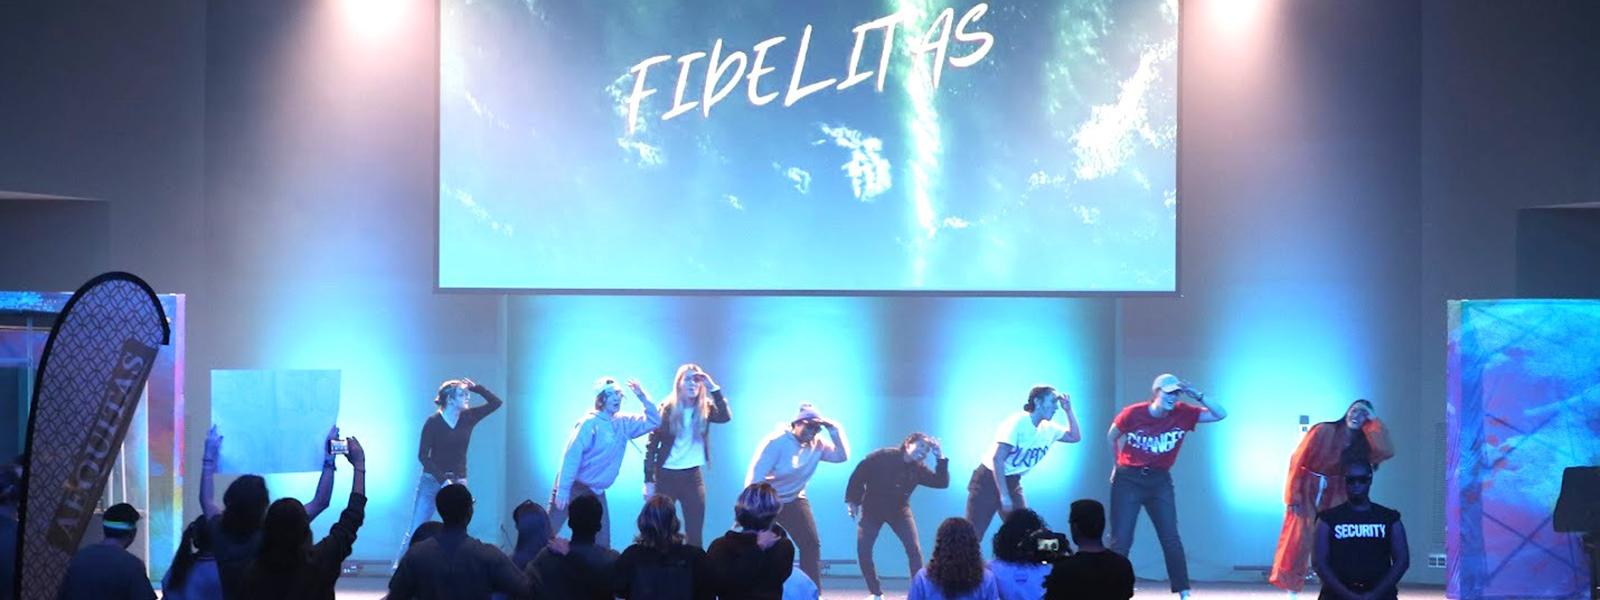 Winners: Fidelitas, the House of Faithfulness, performs. (Photo by Chariti Mealing, CIU Student Photographer) 